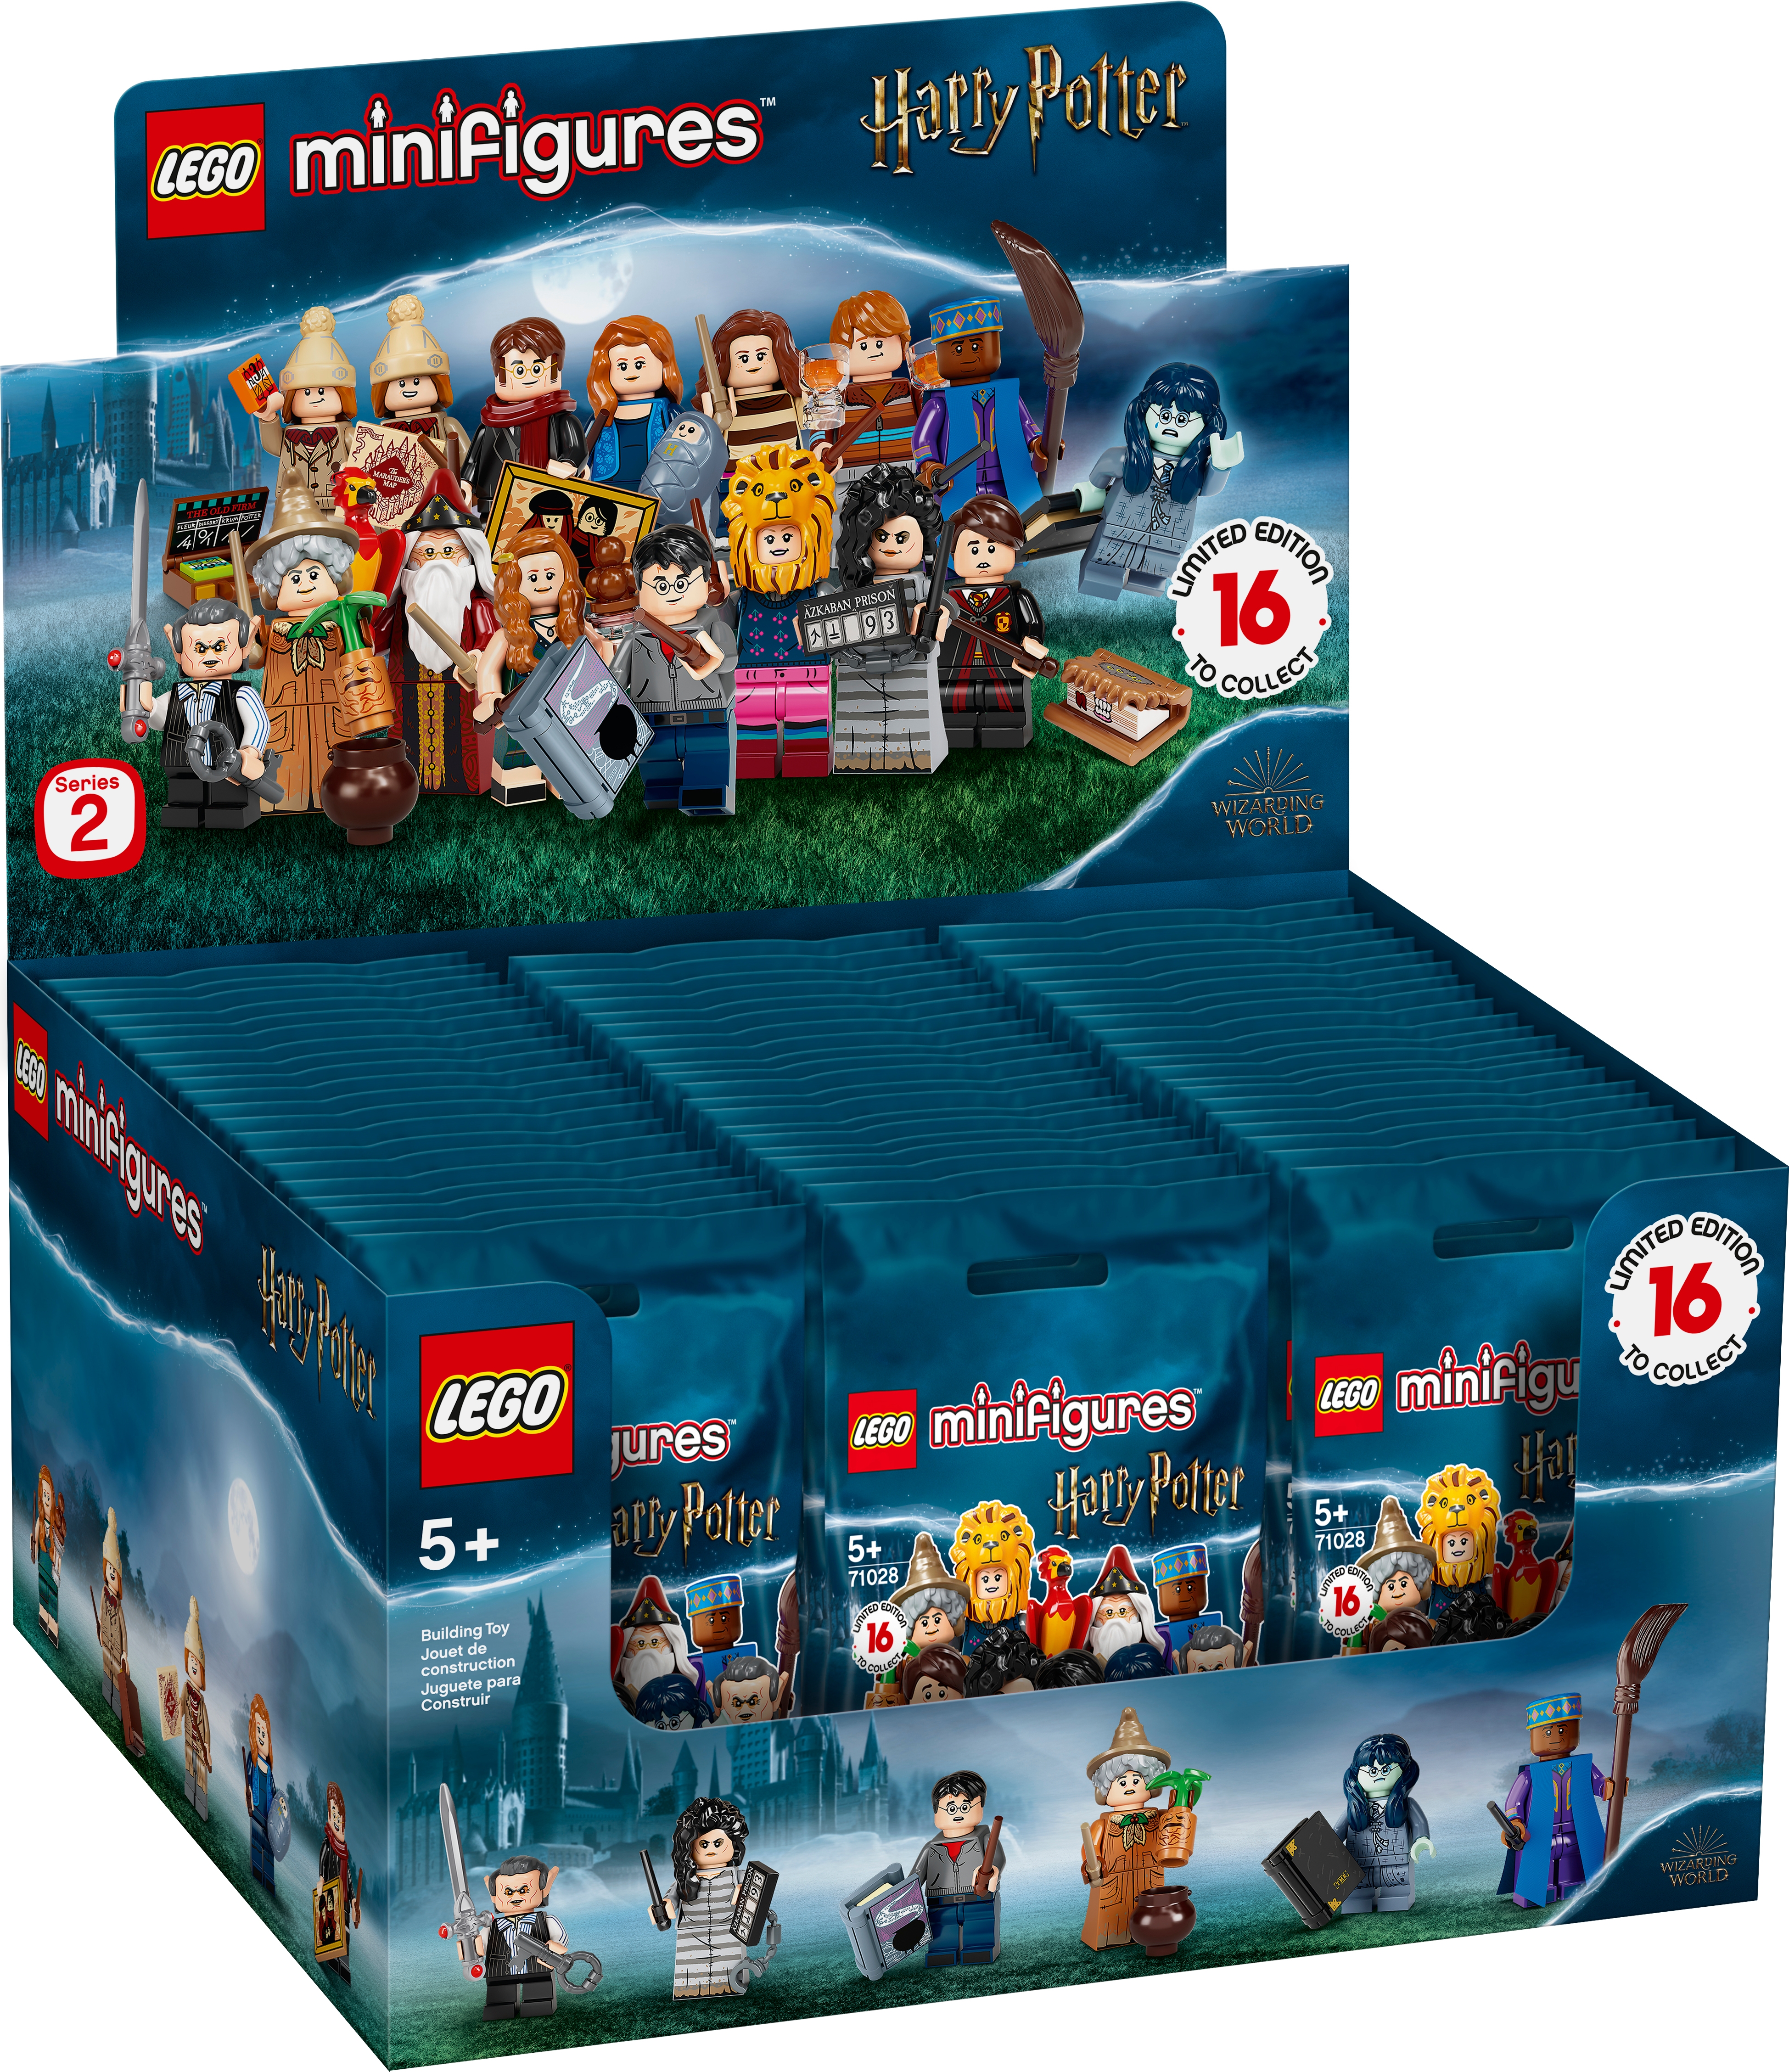 Lego Harry Potter 2 Minifigures Complete Set Of 16 #71028 